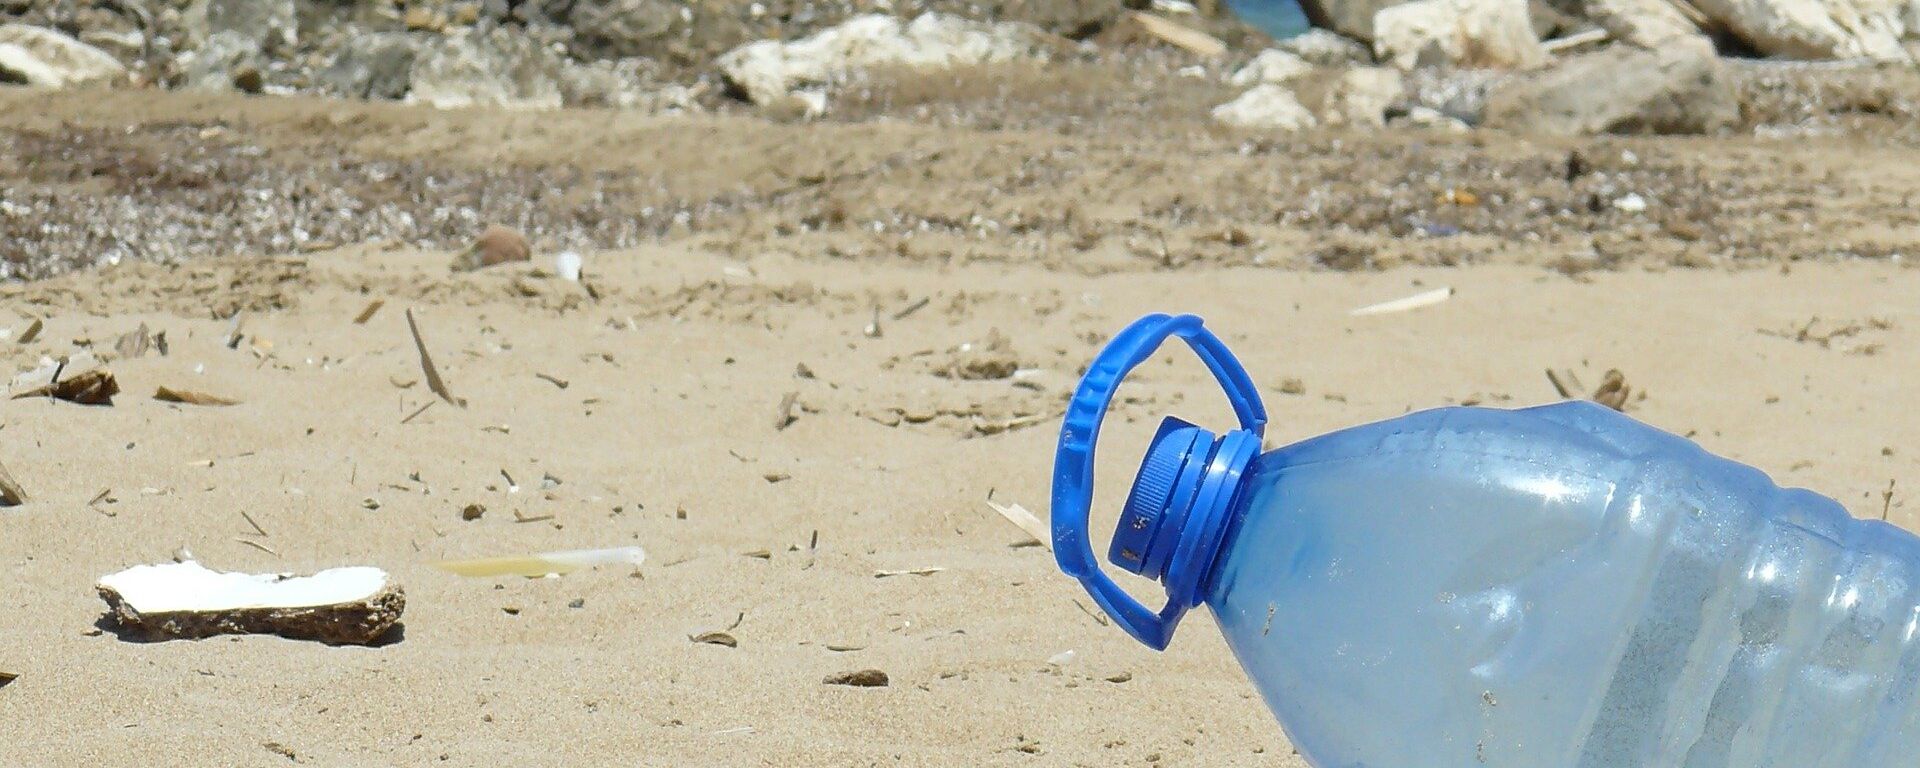 Plastic bottle on a beach. File photo. - Sputnik International, 1920, 21.01.2023